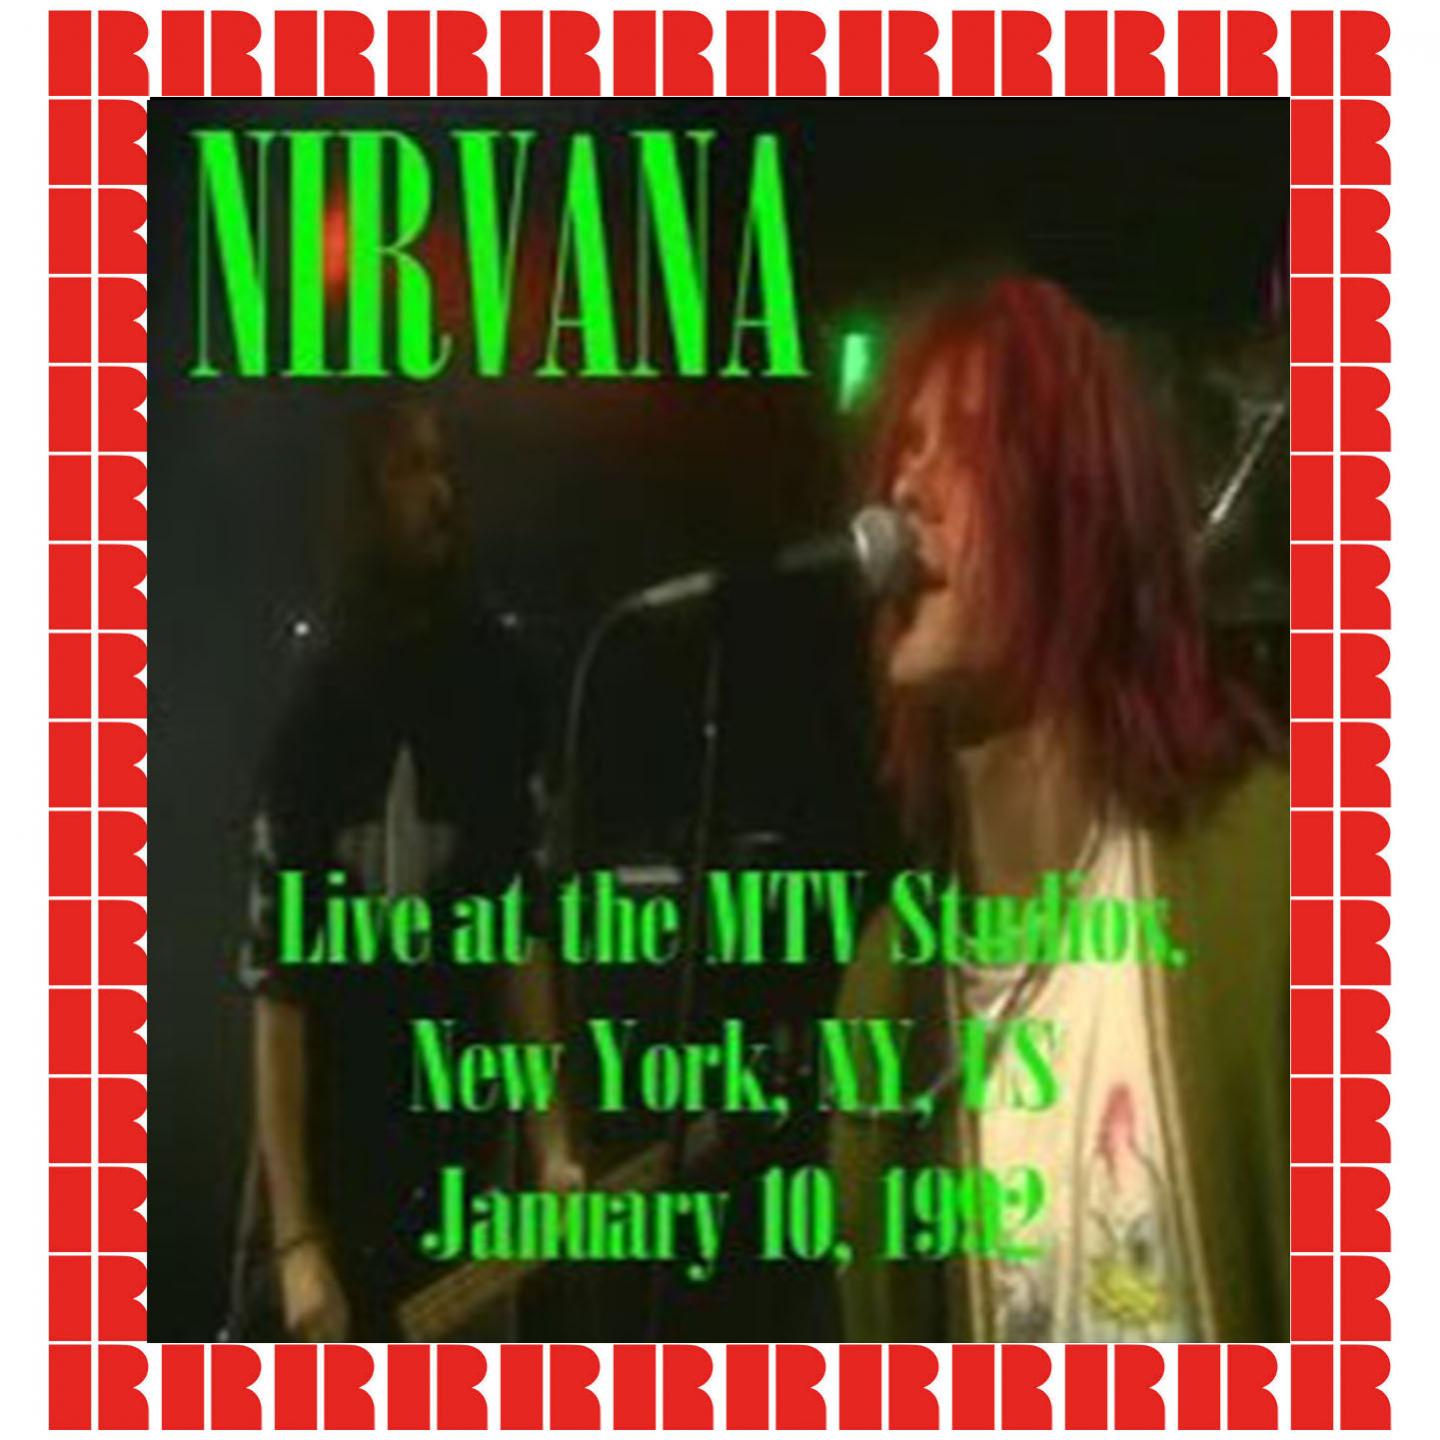 MTV Studios, New York, January 10th, 1992